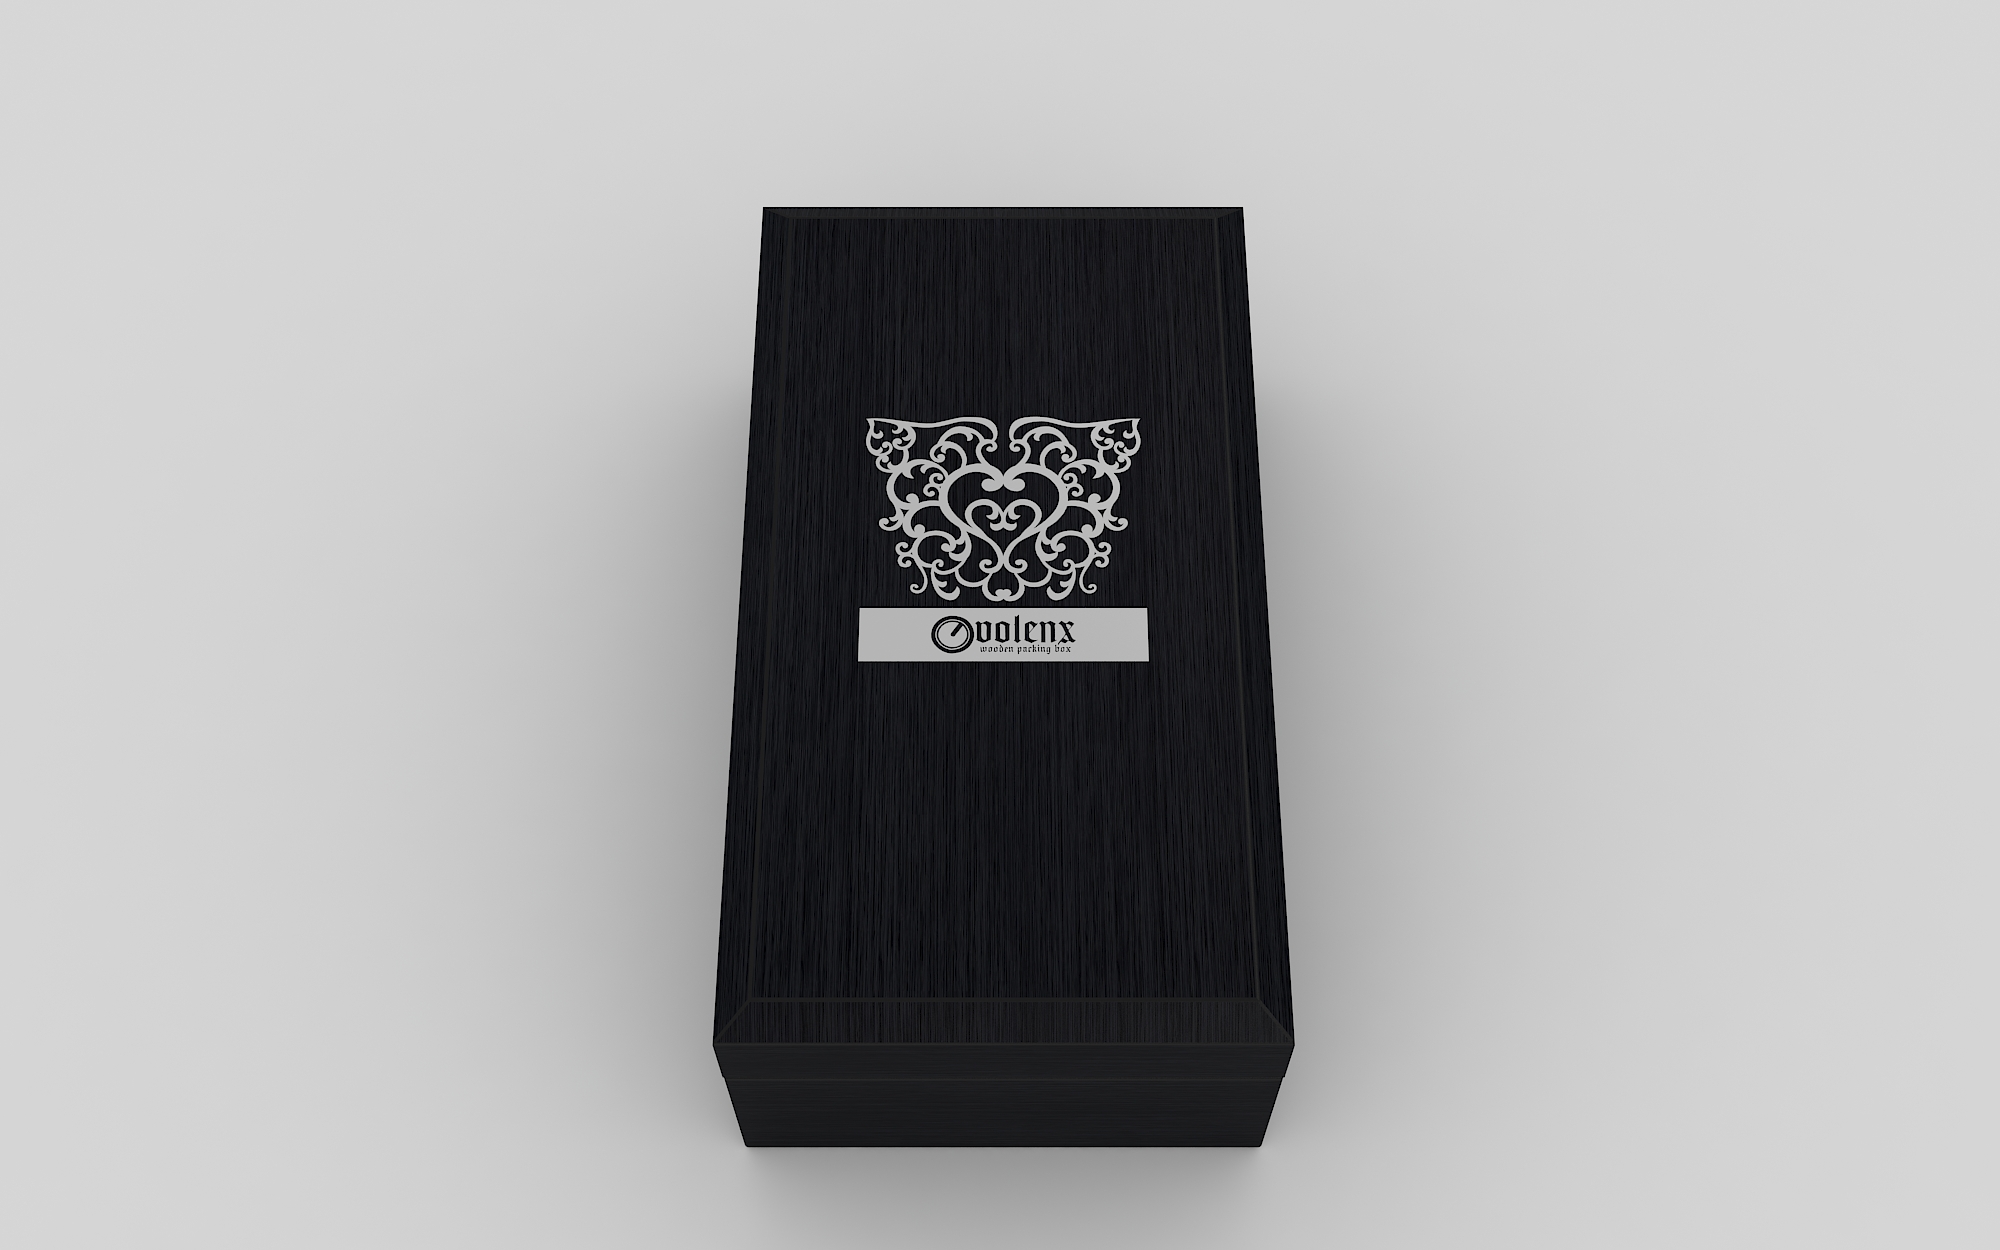 perfume box luxury packaging WLJ-0437 Details